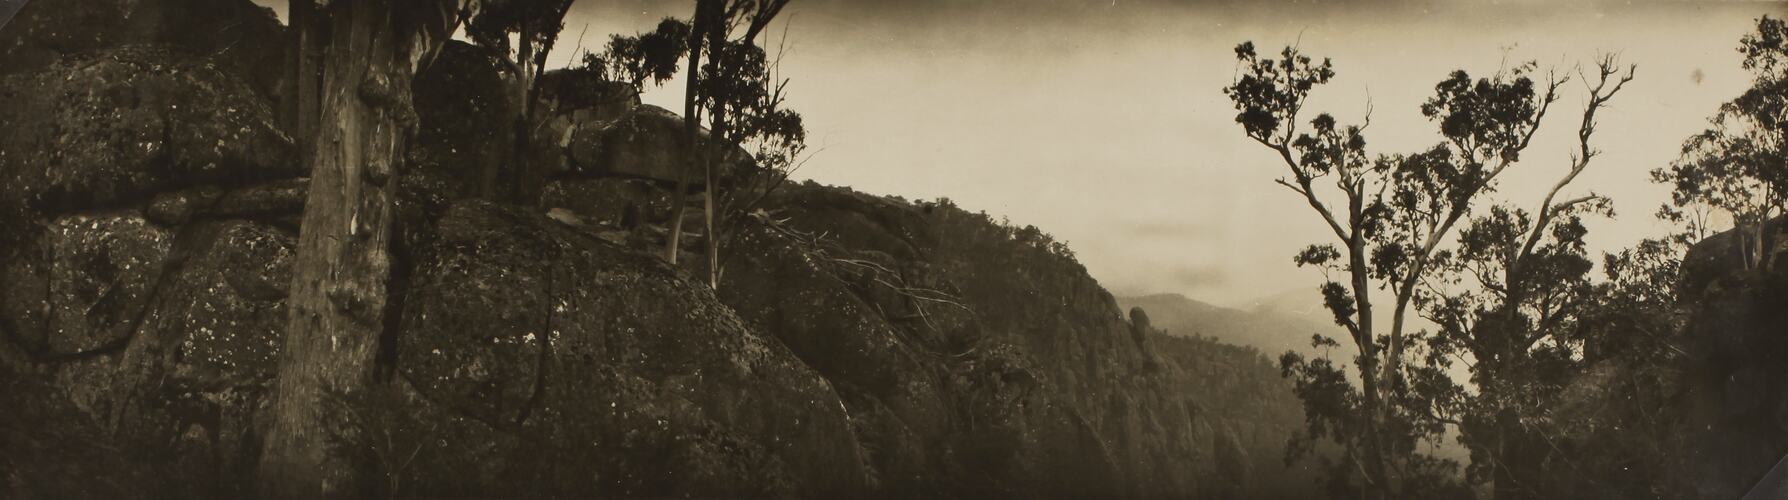 Photograph - Mountain Landscape, Lorne District, Victoria, circa 1920s